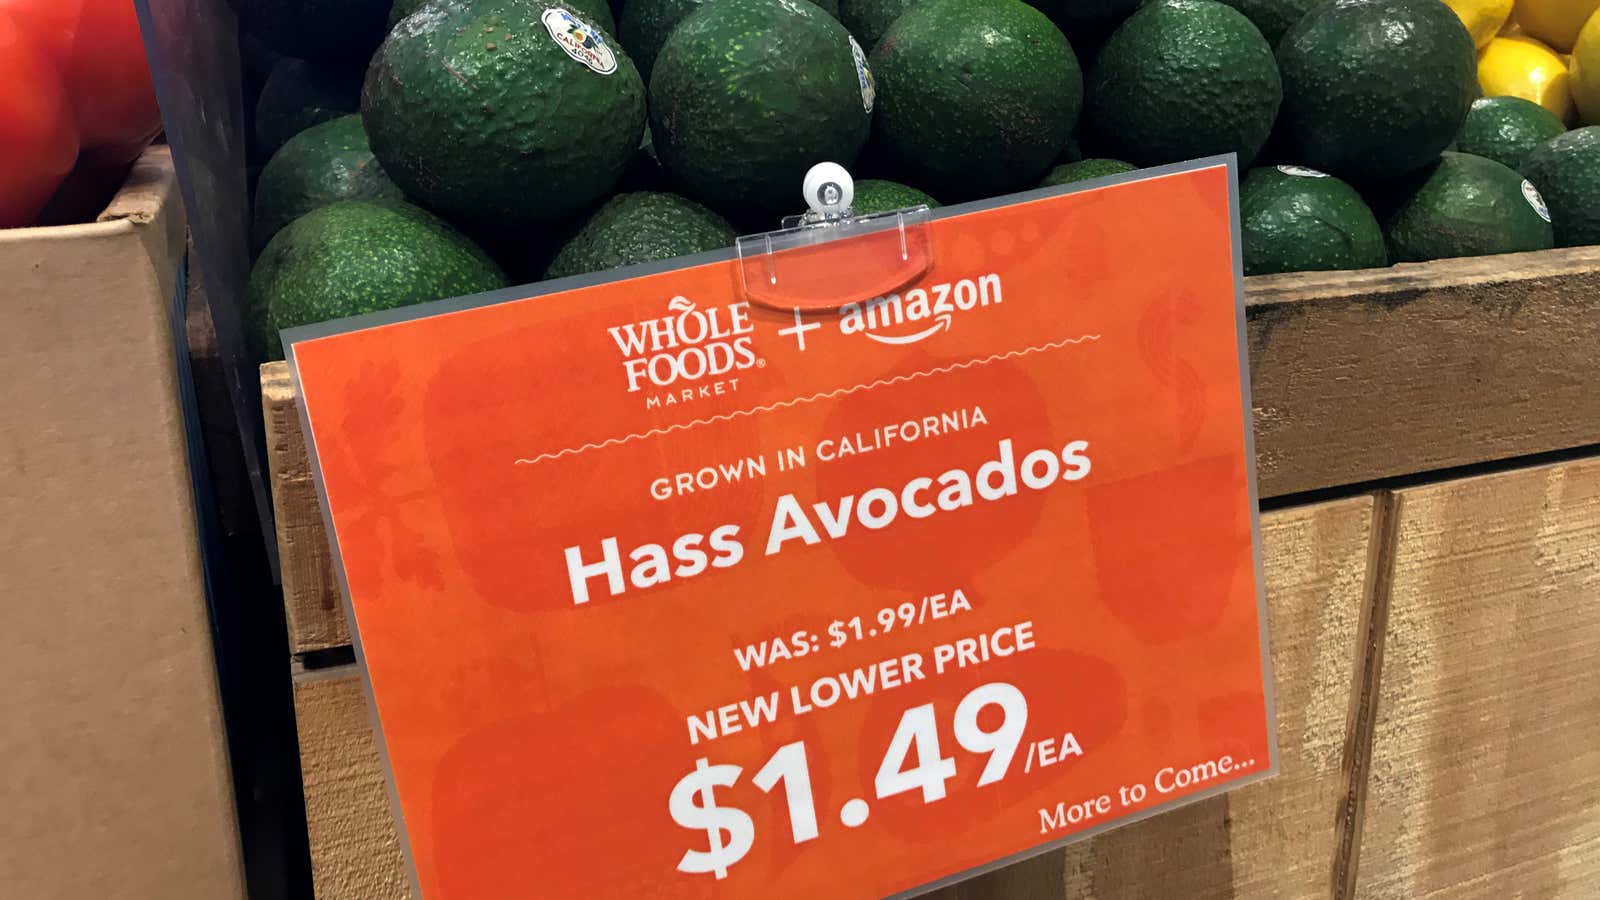 No avocados were harmed, thankfully.